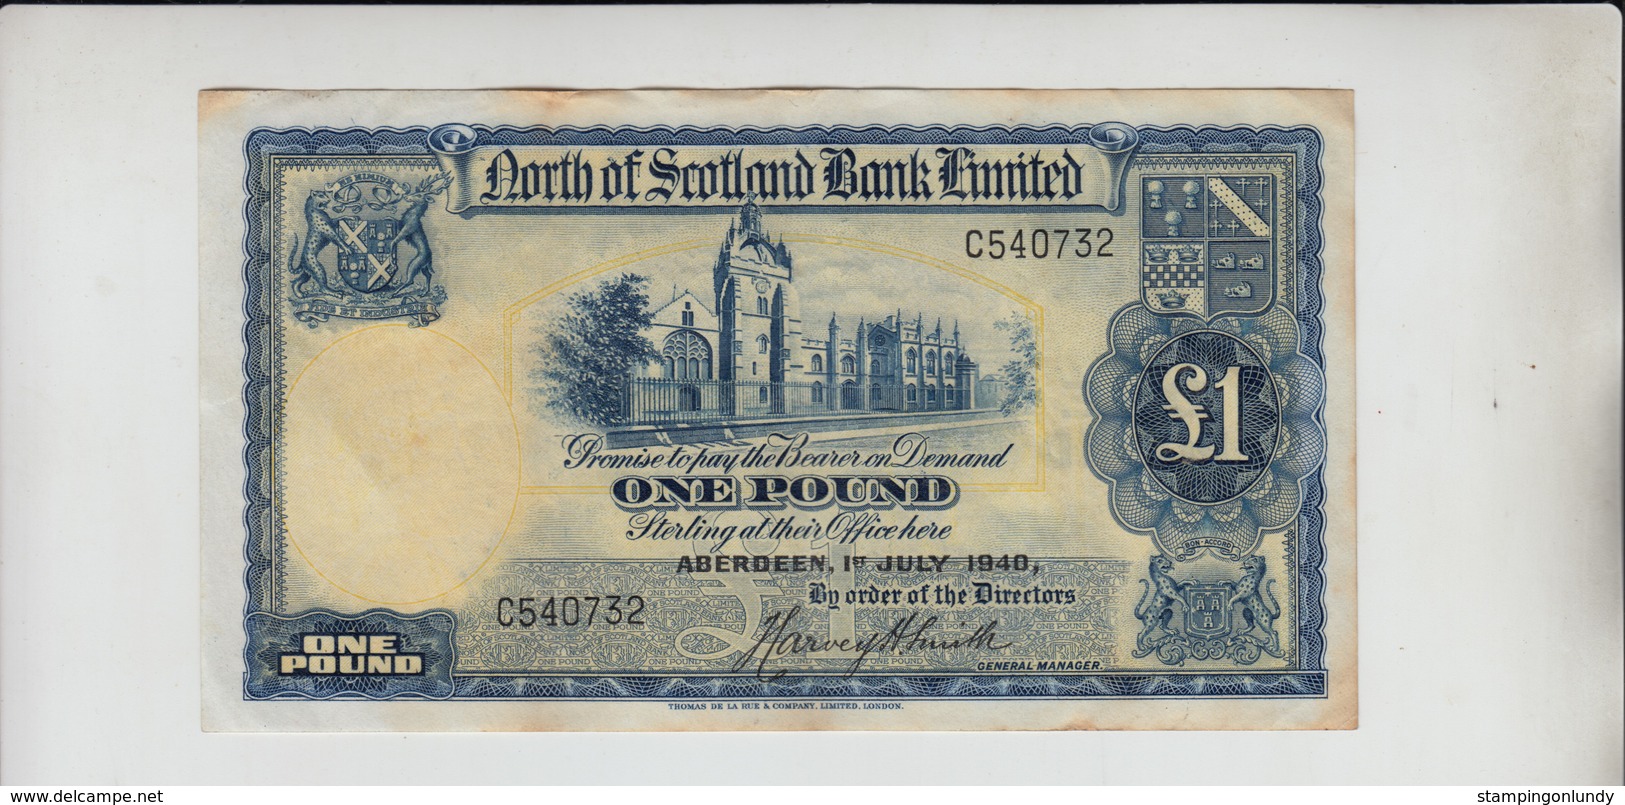 AB167 North Of Scotland Bank Ltd £1 Note 1 July 1940 #C540732 FREE UK P+P - 1 Pound